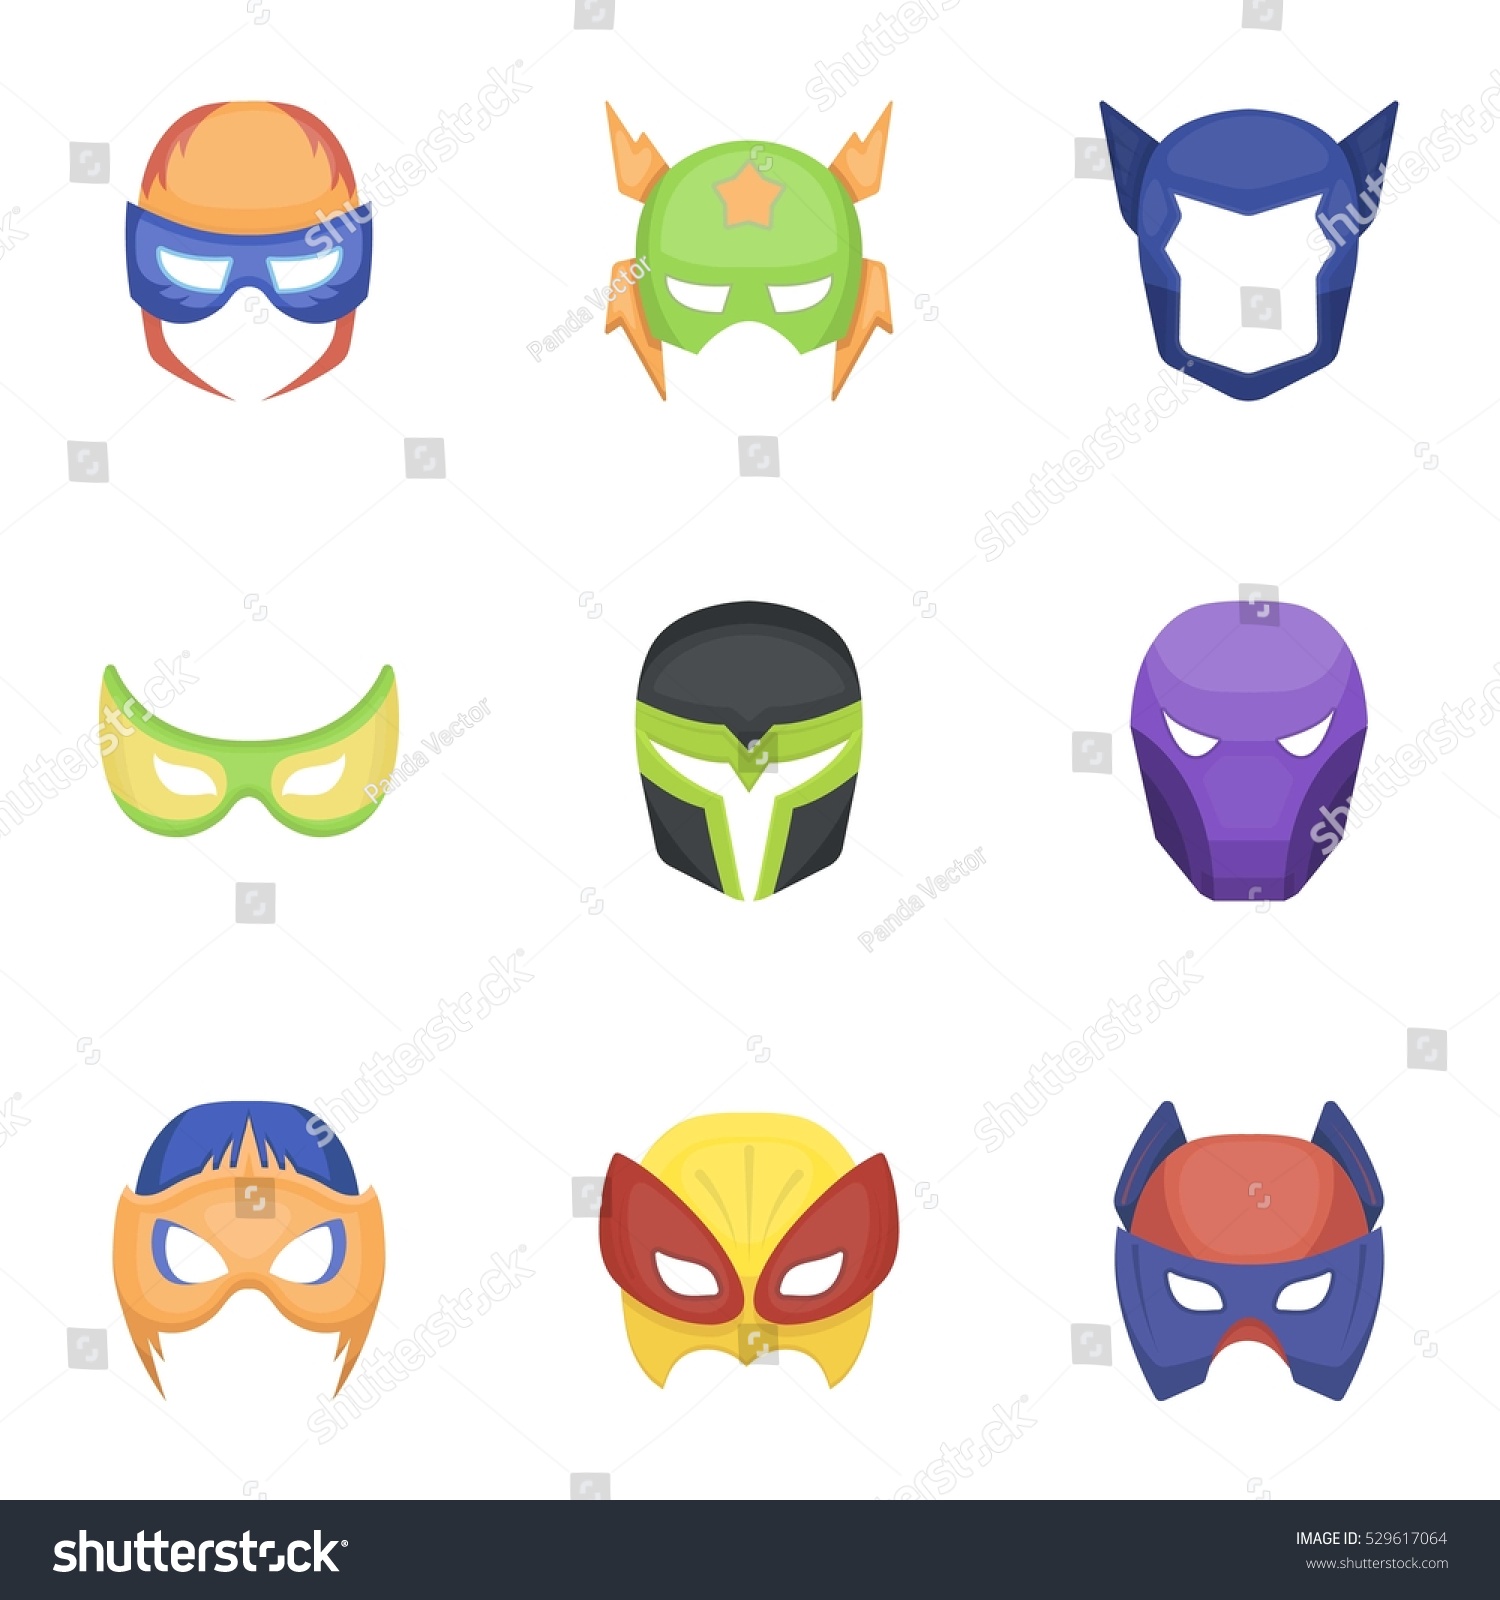 Edit Vectors Free Online - Superhero mask | Shutterstock Editor